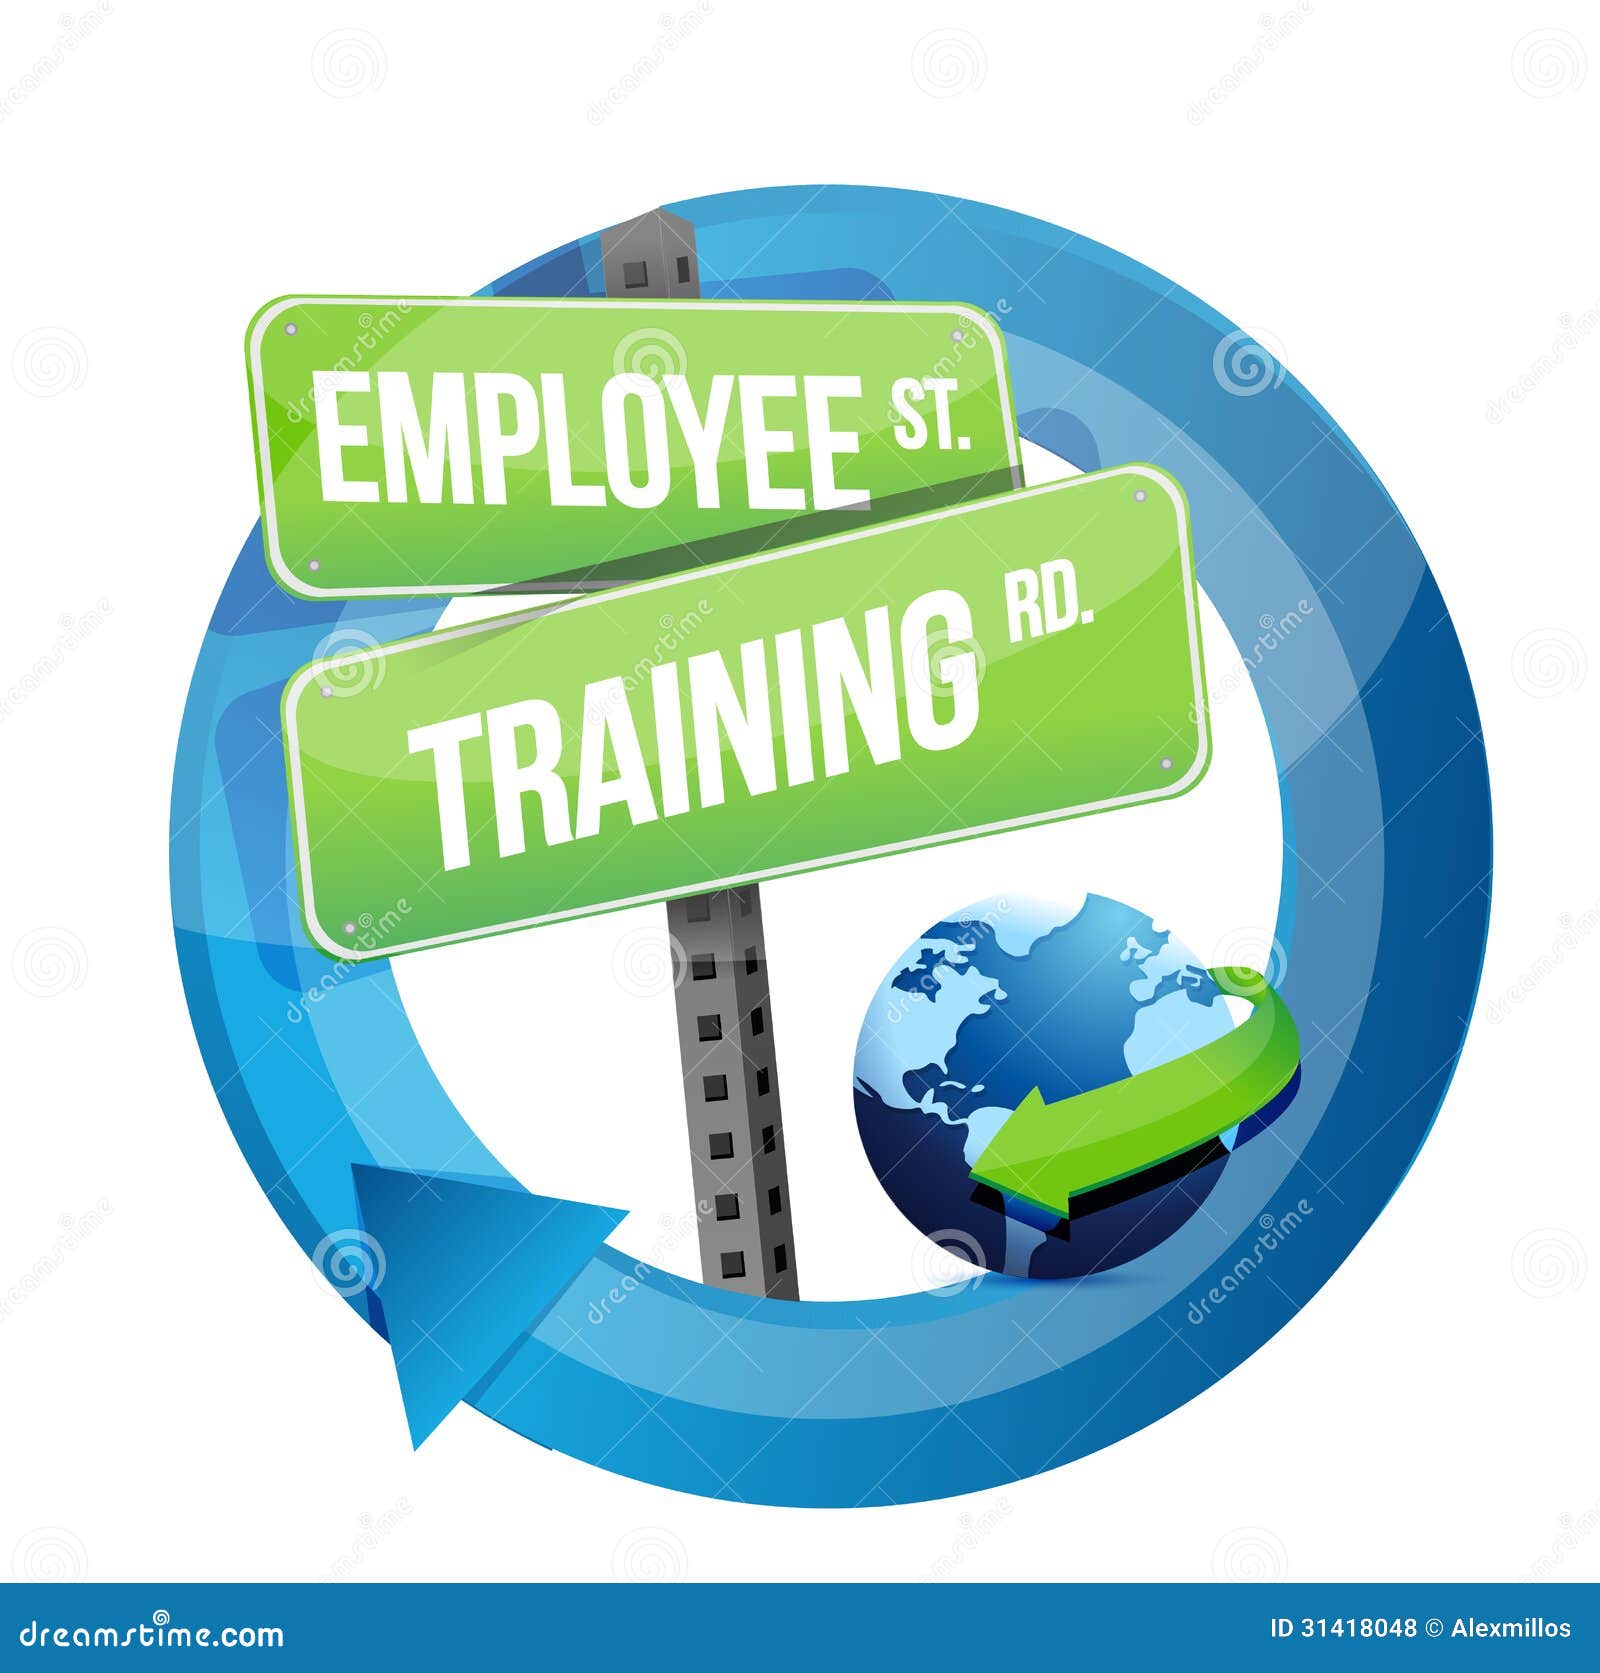 employee-training-road-sign-illustration